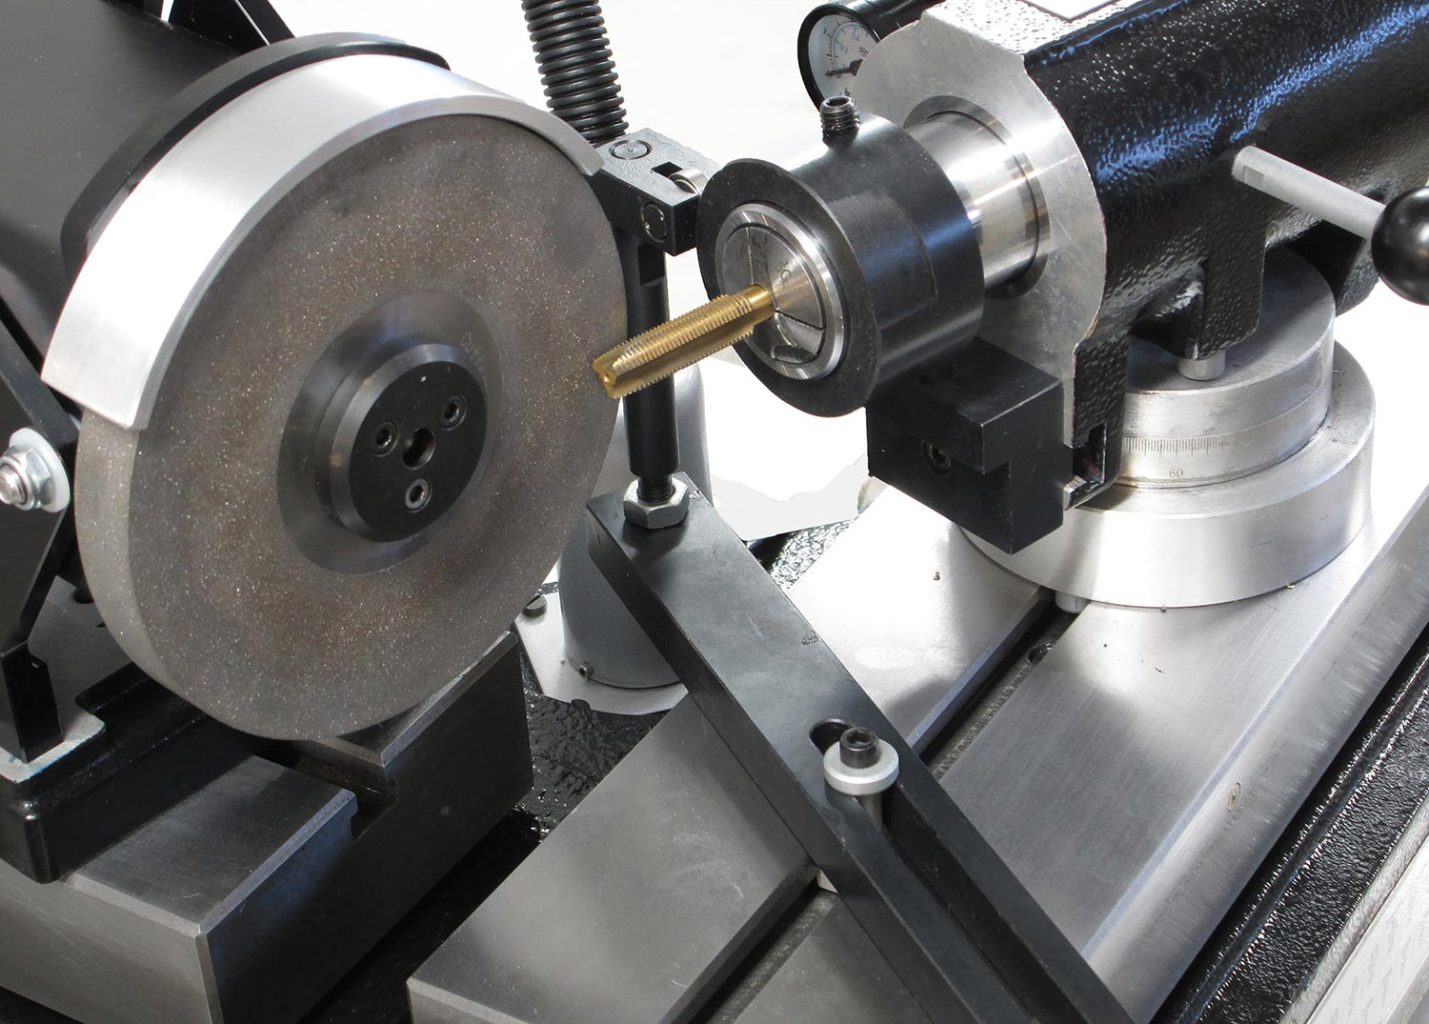 Grinder Carbide Tools Drill Bit Sharpener Milling Cutter Grinding Machine